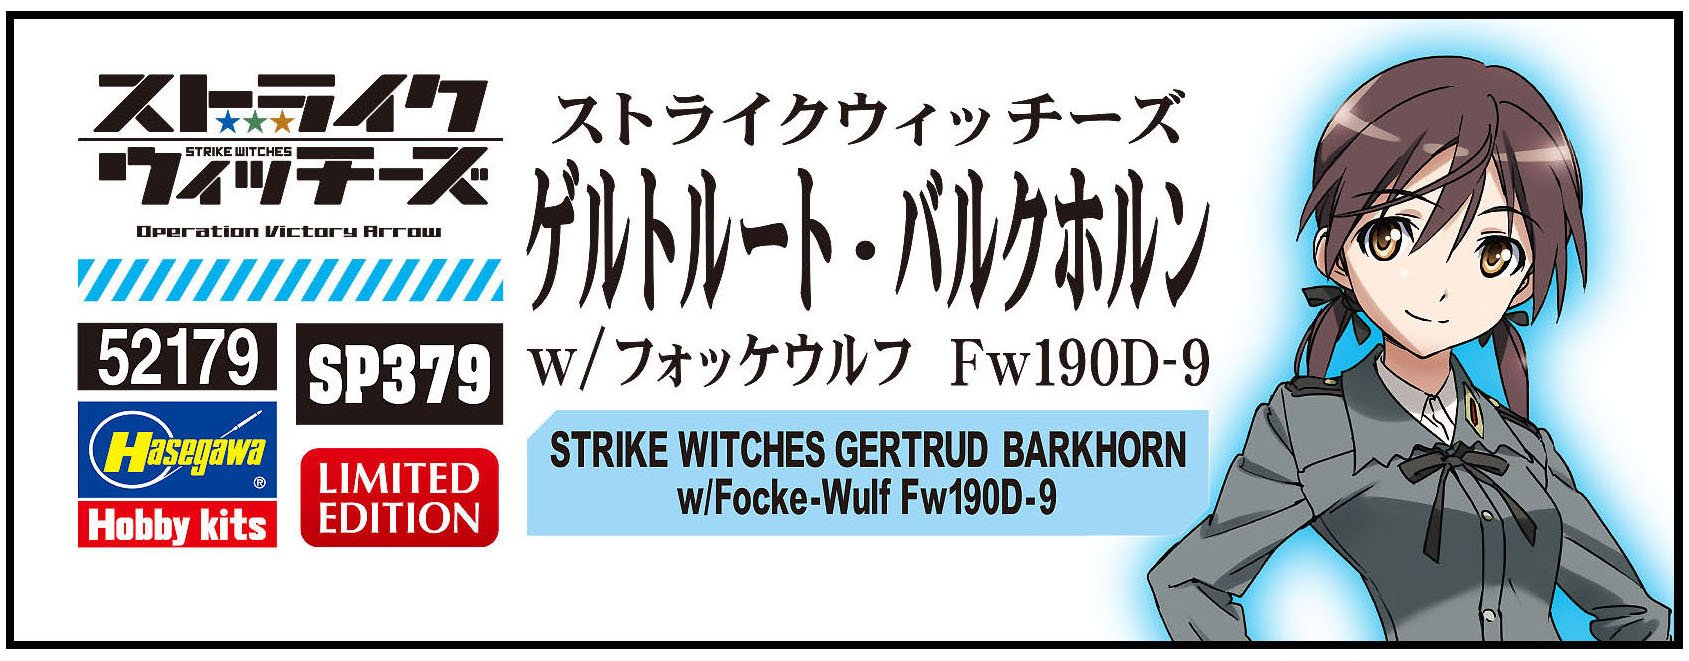 HASEGAWA Sp379 Strike Witches Gertrud Barkhorn 1/20 W/Focke-Wulf Fw190D-9 1/72